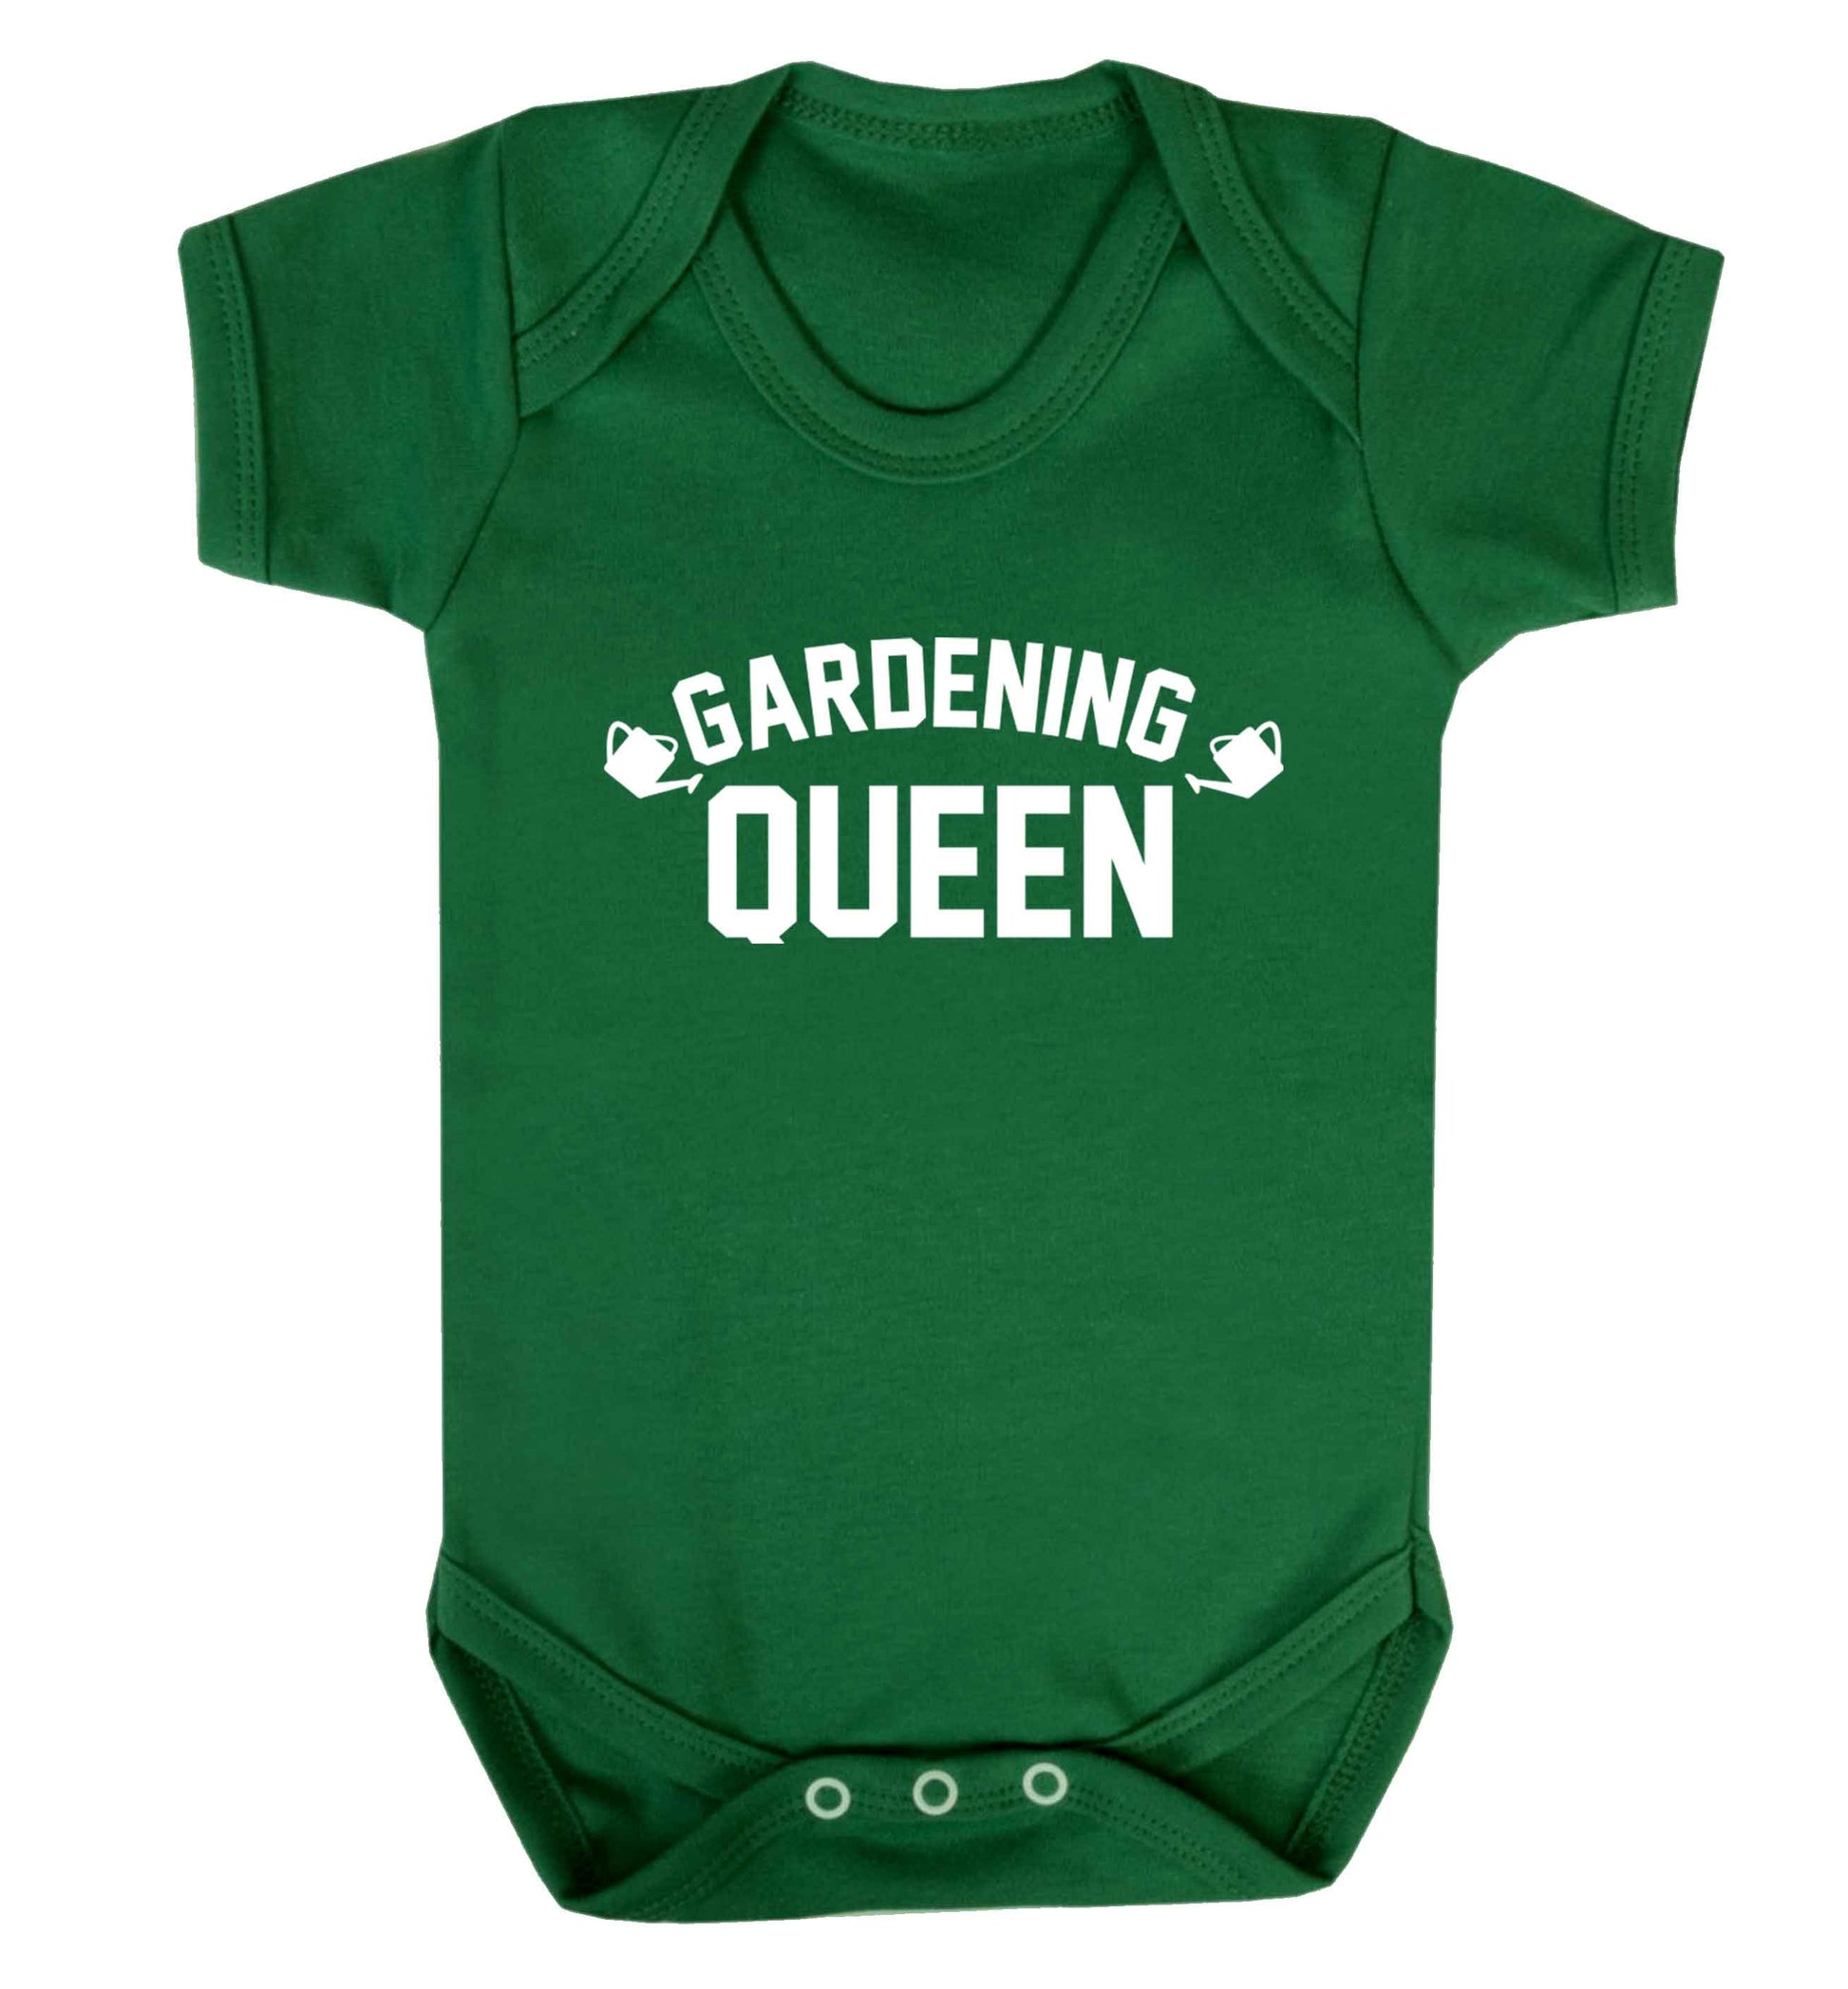 Gardening queen Baby Vest green 18-24 months